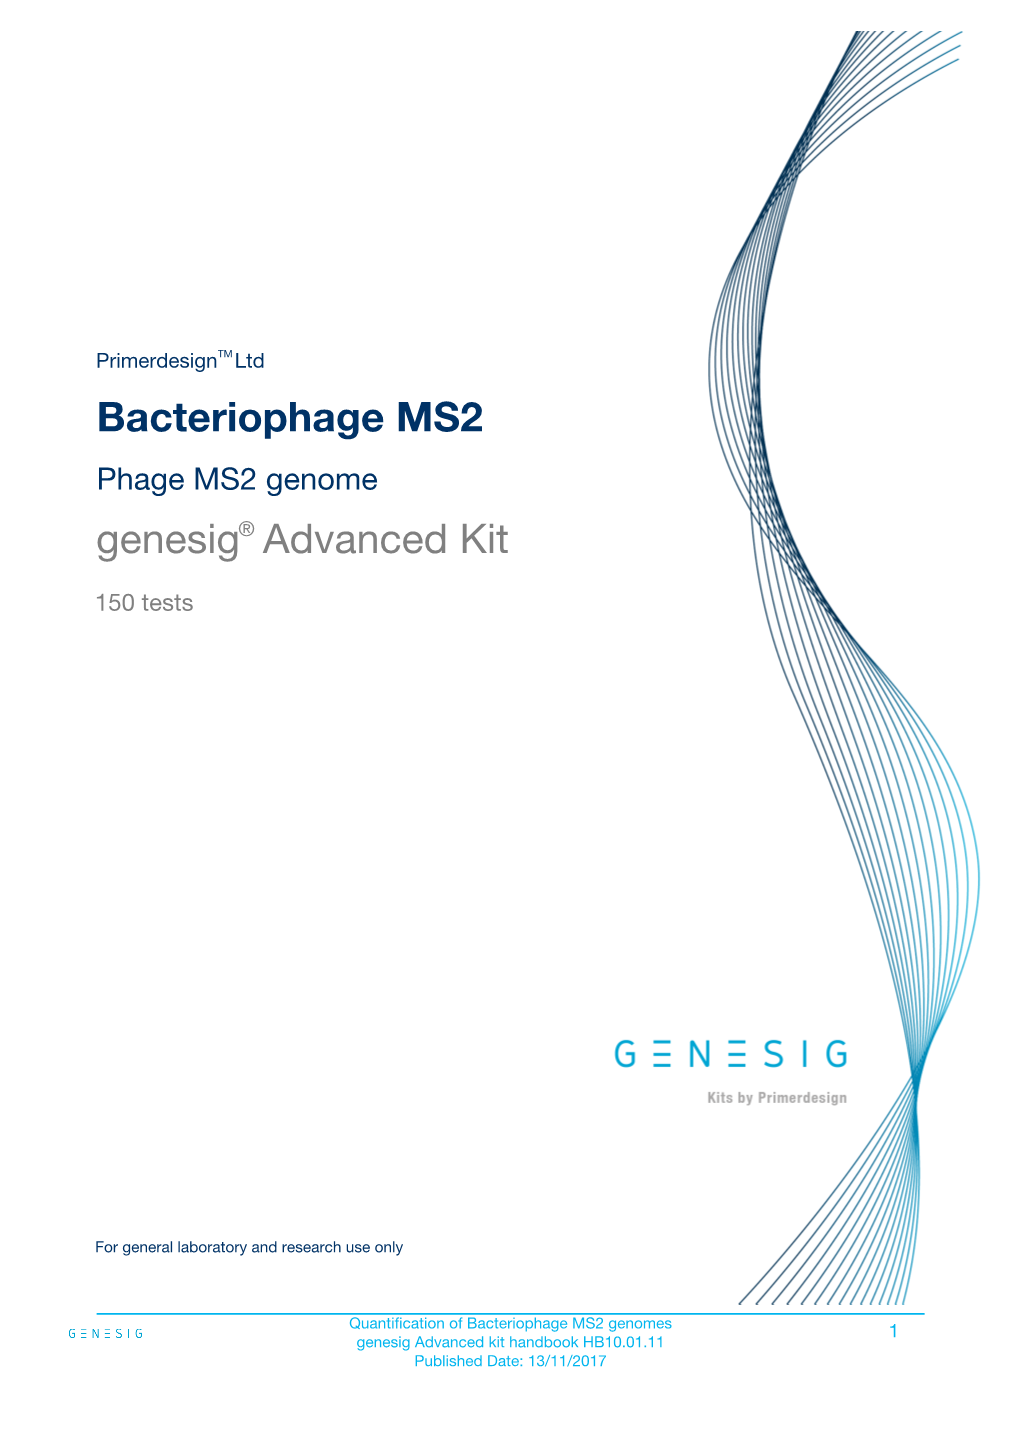 Bacteriophage MS2 Genesig Advanced